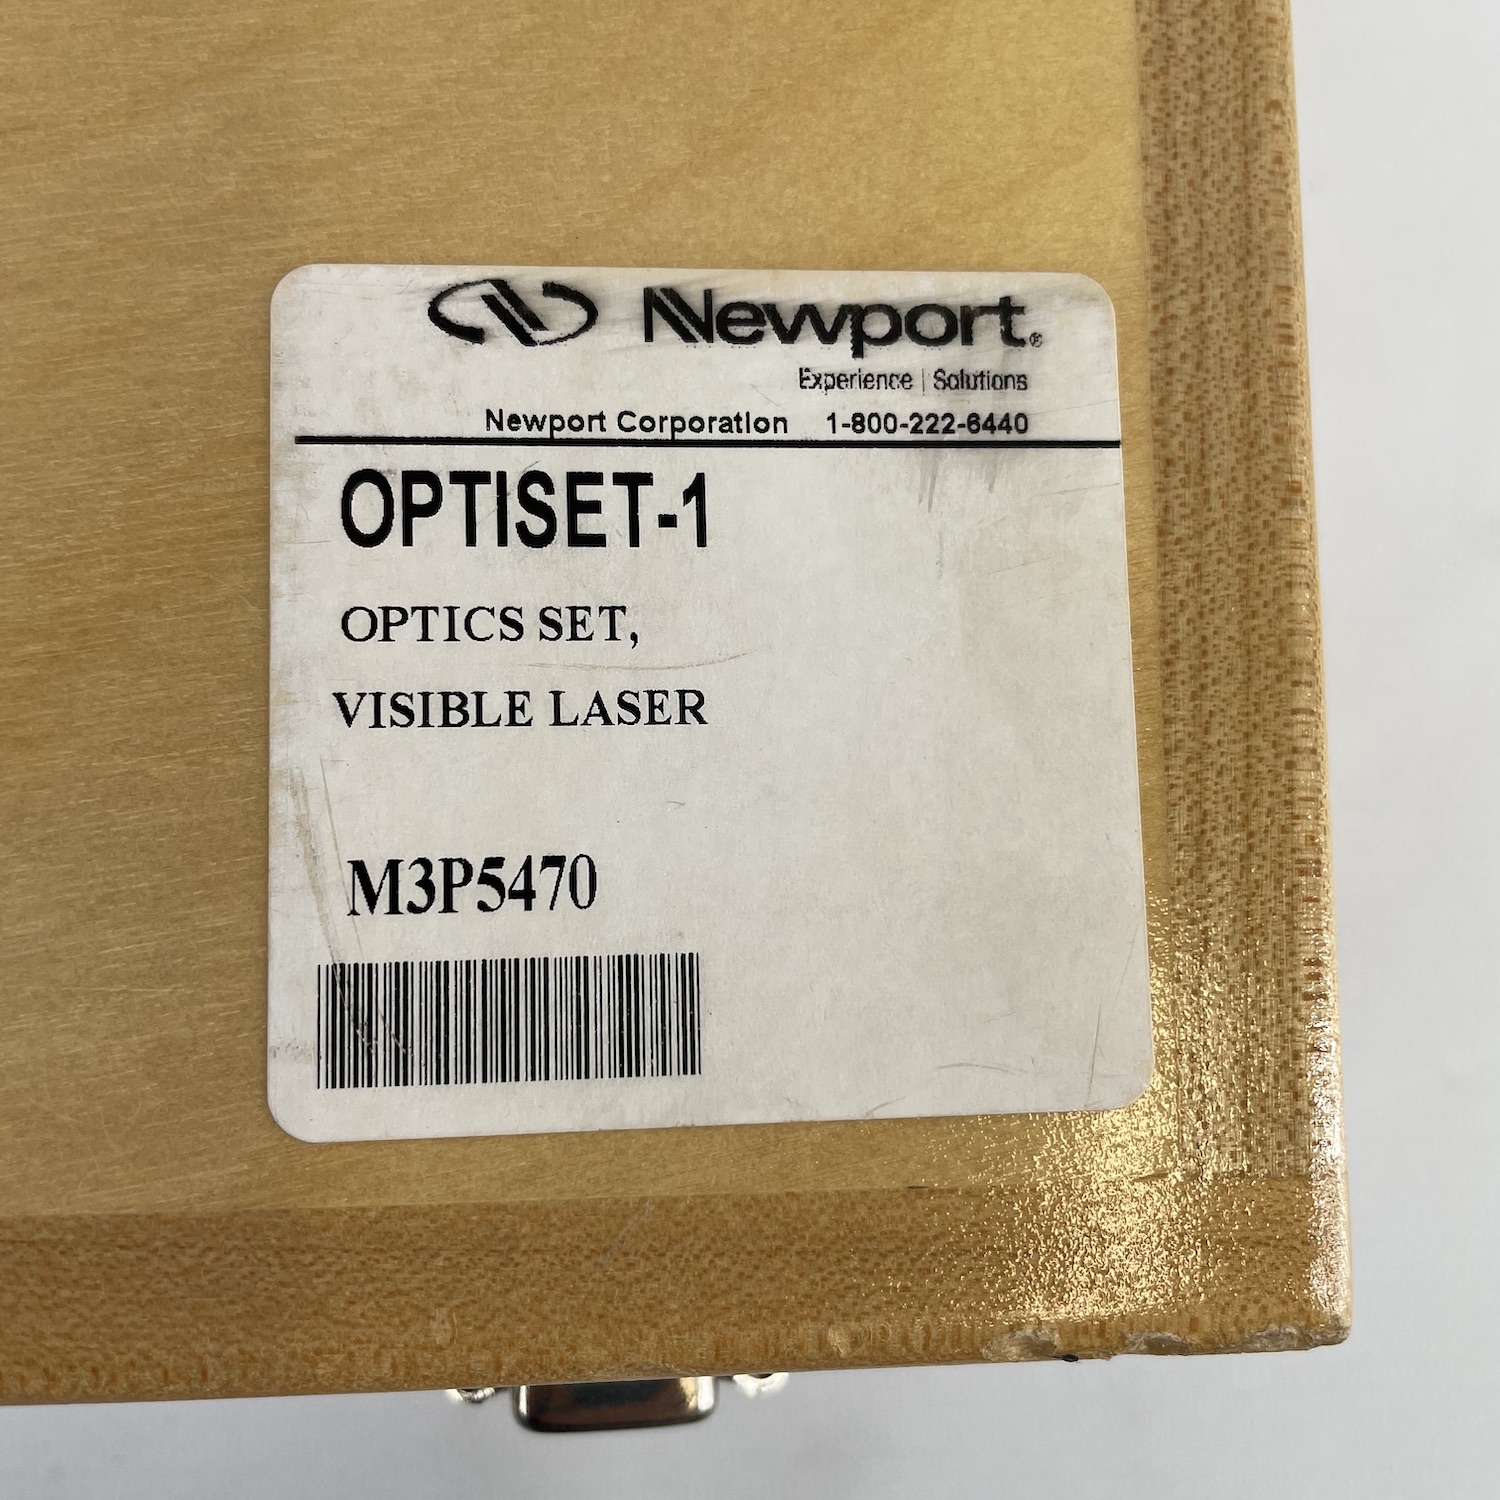 newport | optiset-1 | optics set | visible laser applications | m3p5470